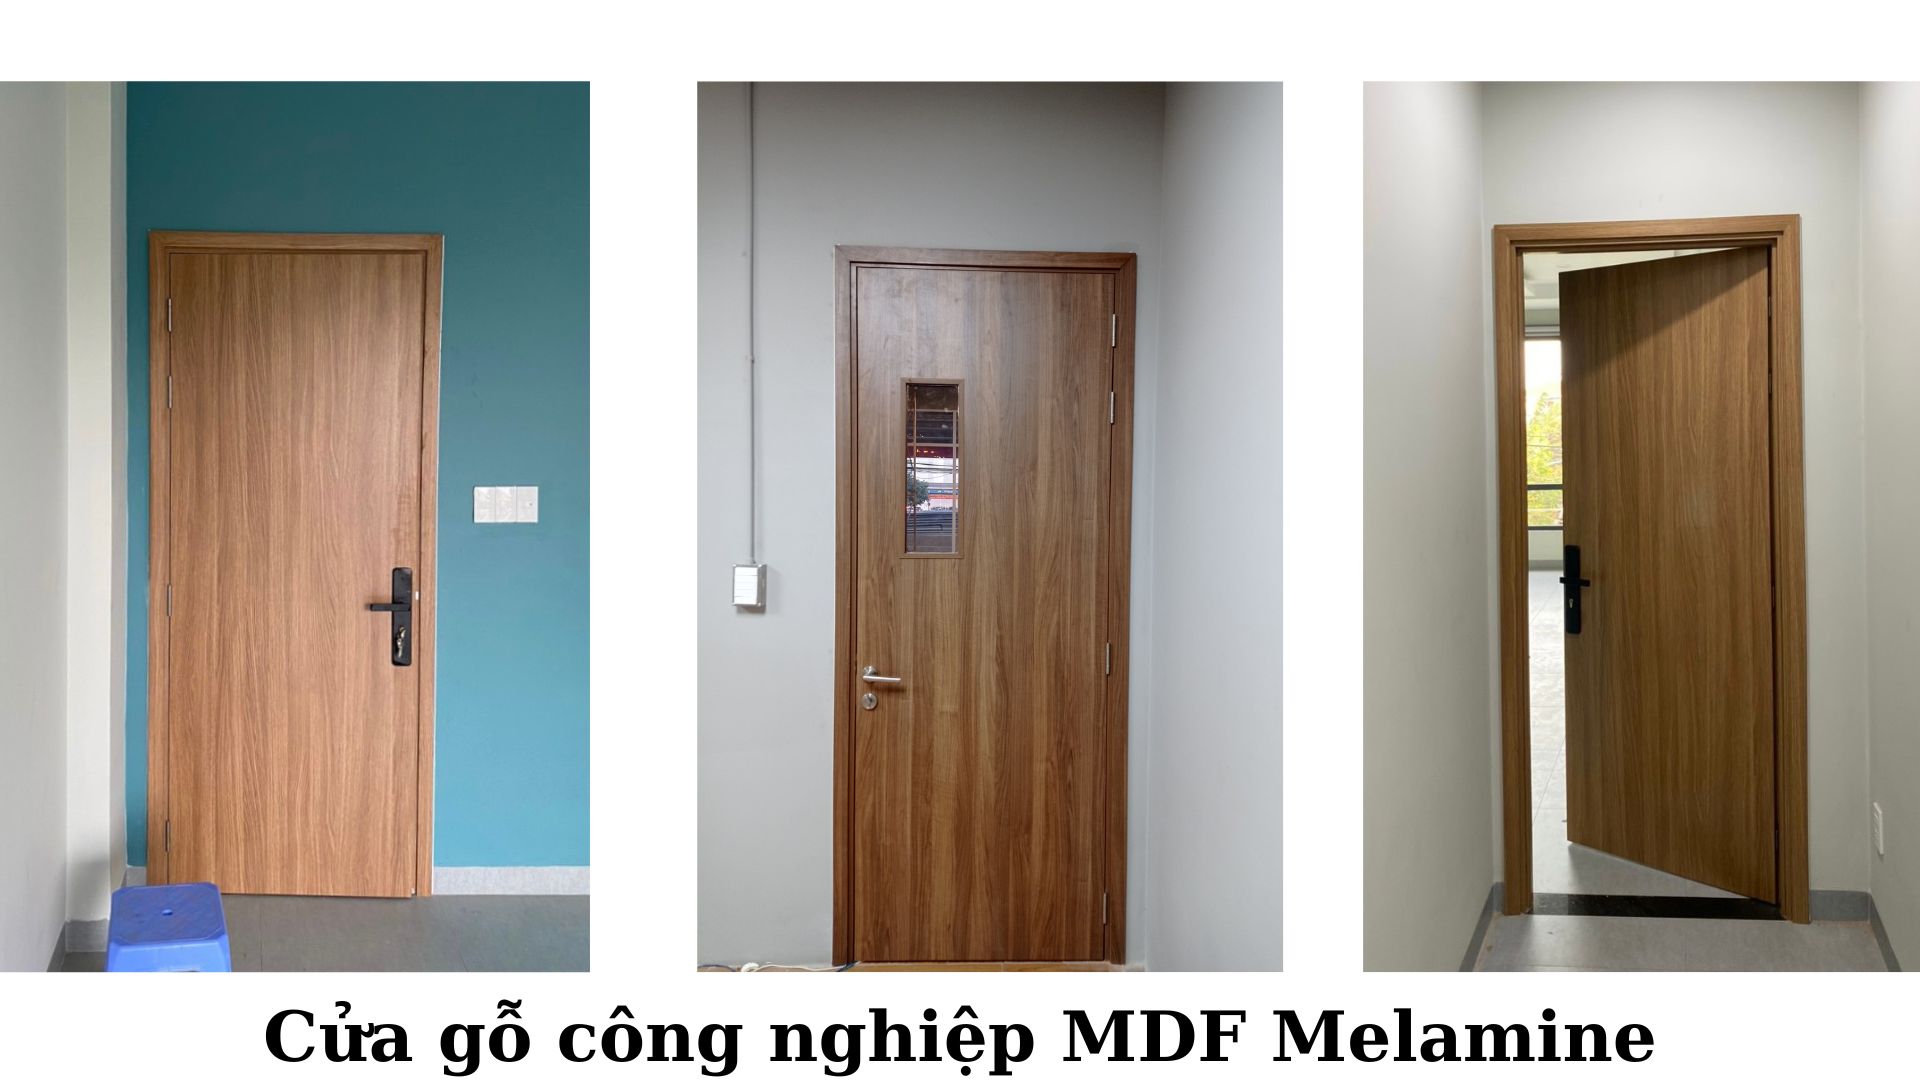 Cua-go-cong-nghiep-MDF-Melamine-3.jpg